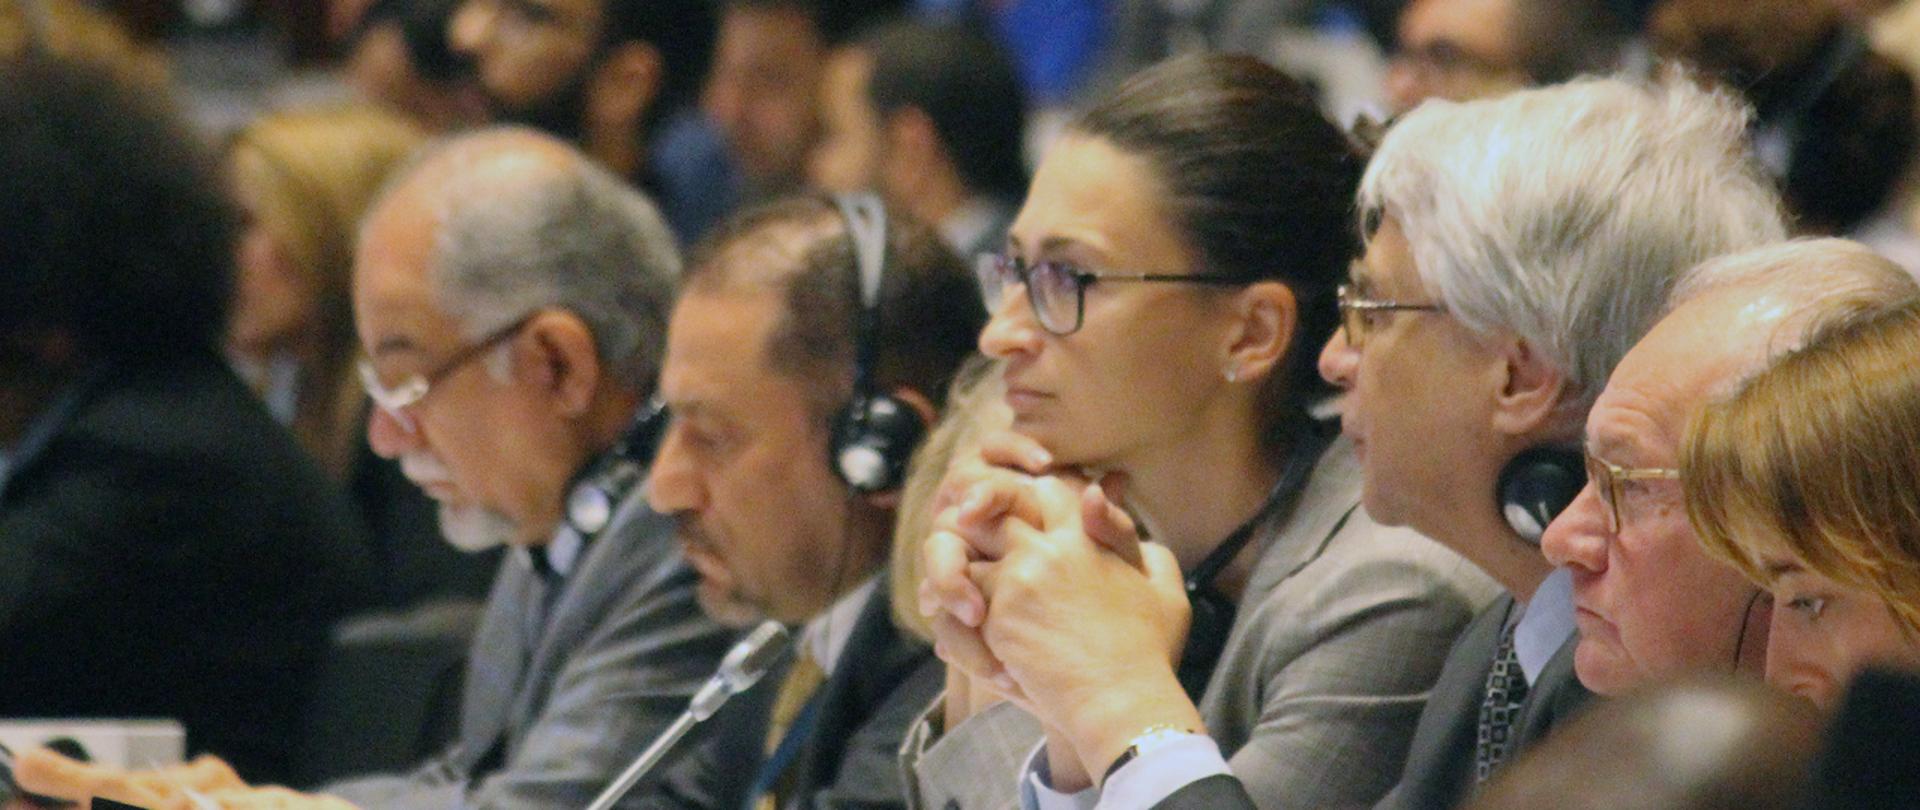 Vice-Minister Golińska attends 43rd UNESCO session